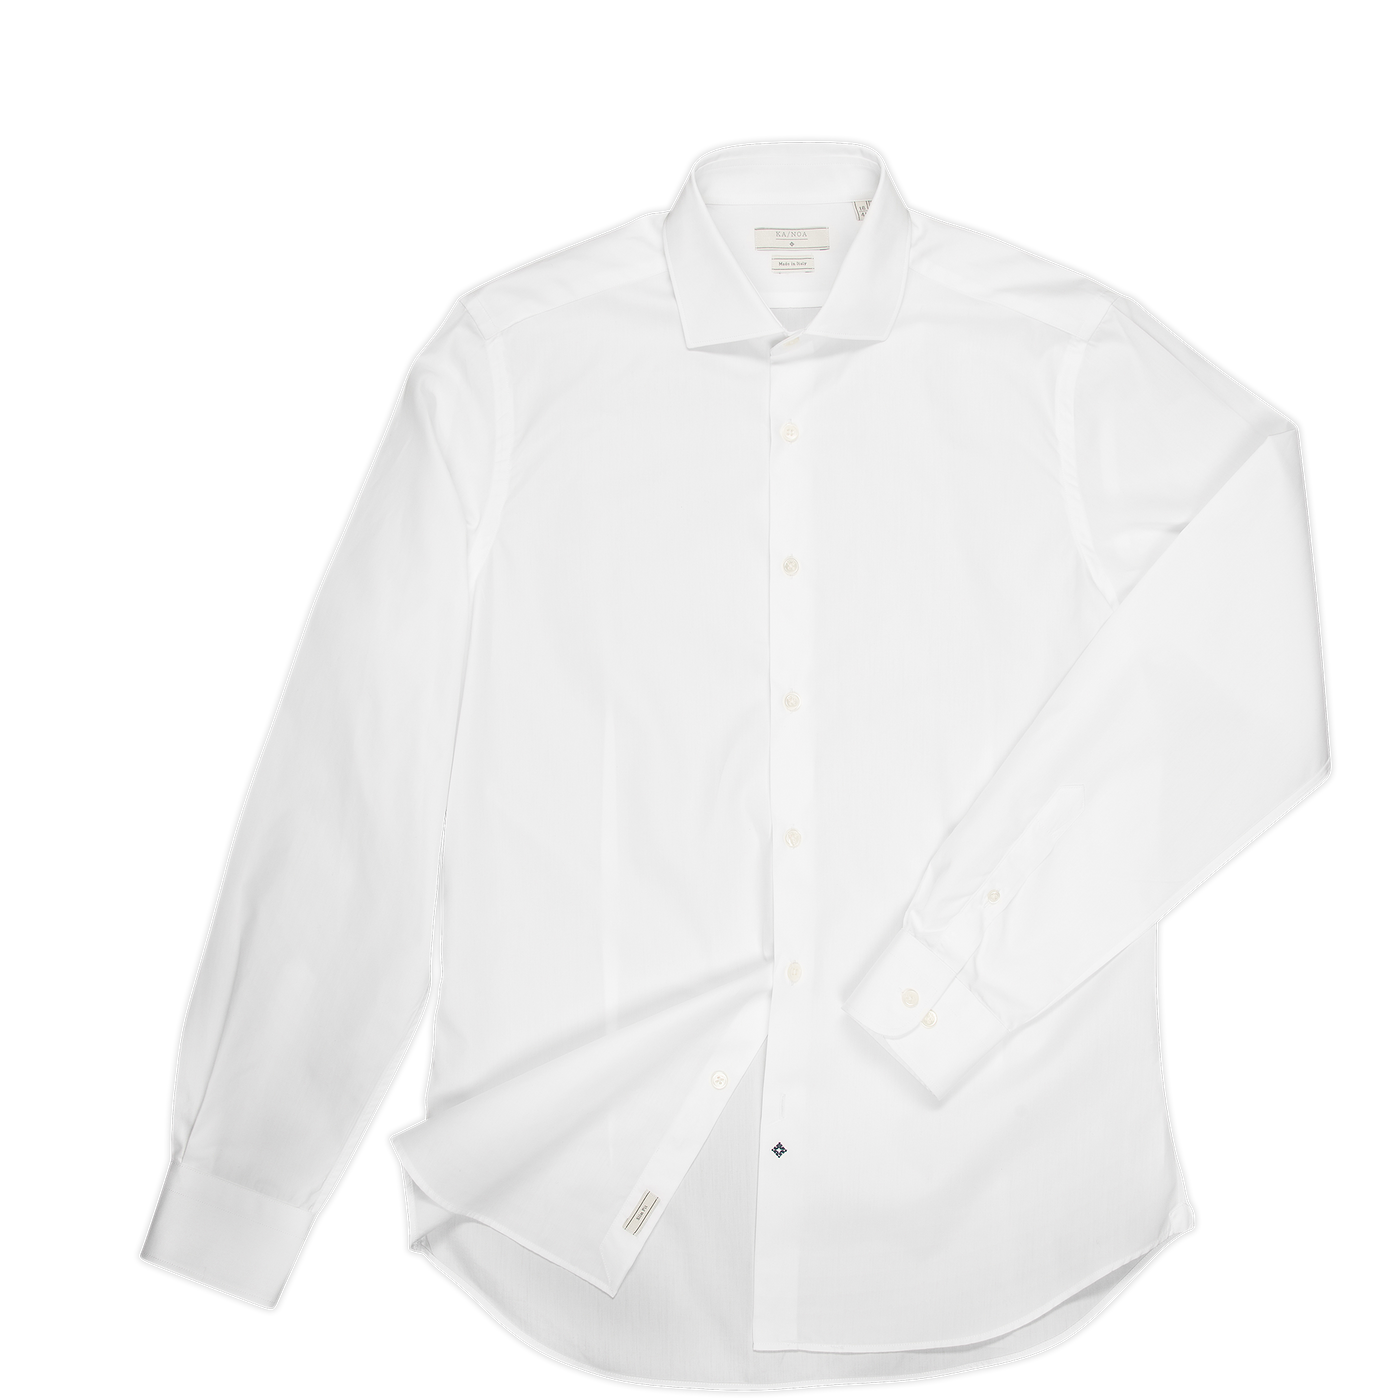 Clamenc shirt cotton popeline (white)